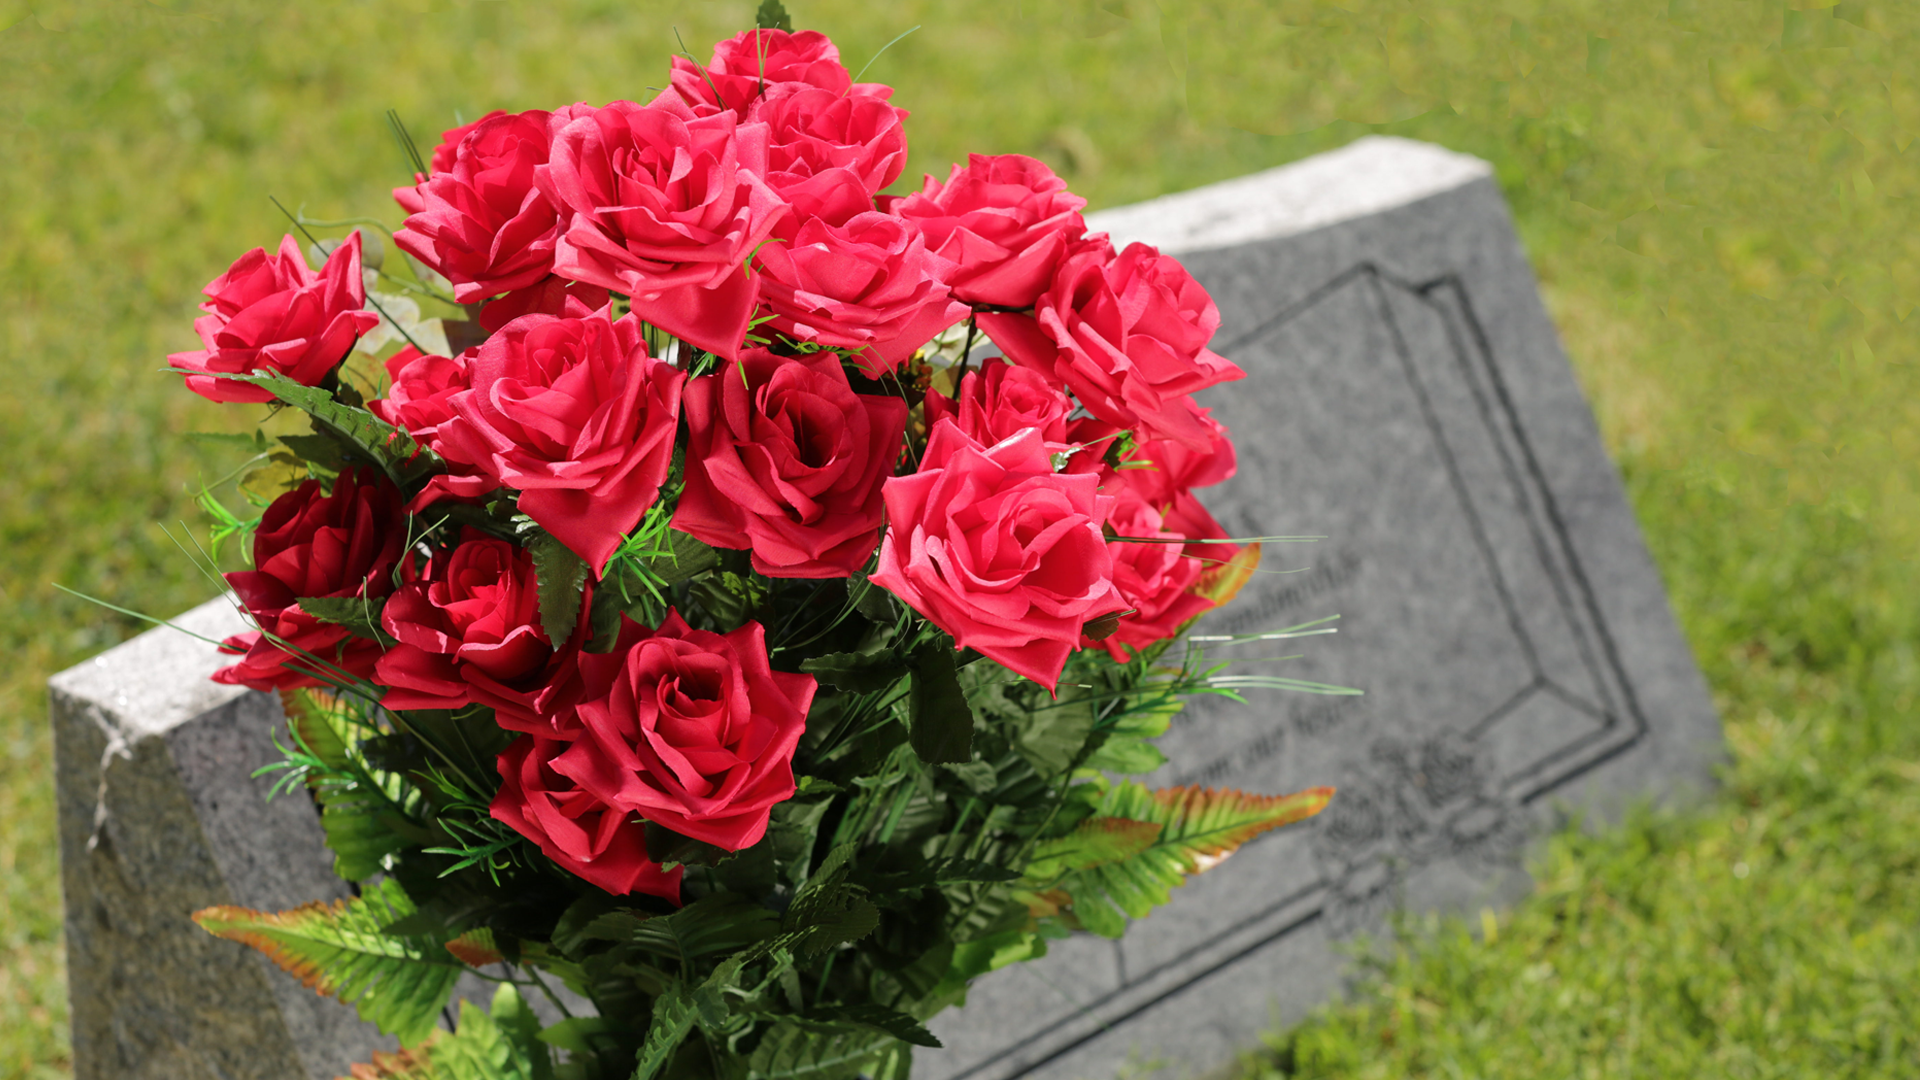 (c) Cemeteryflowers.com